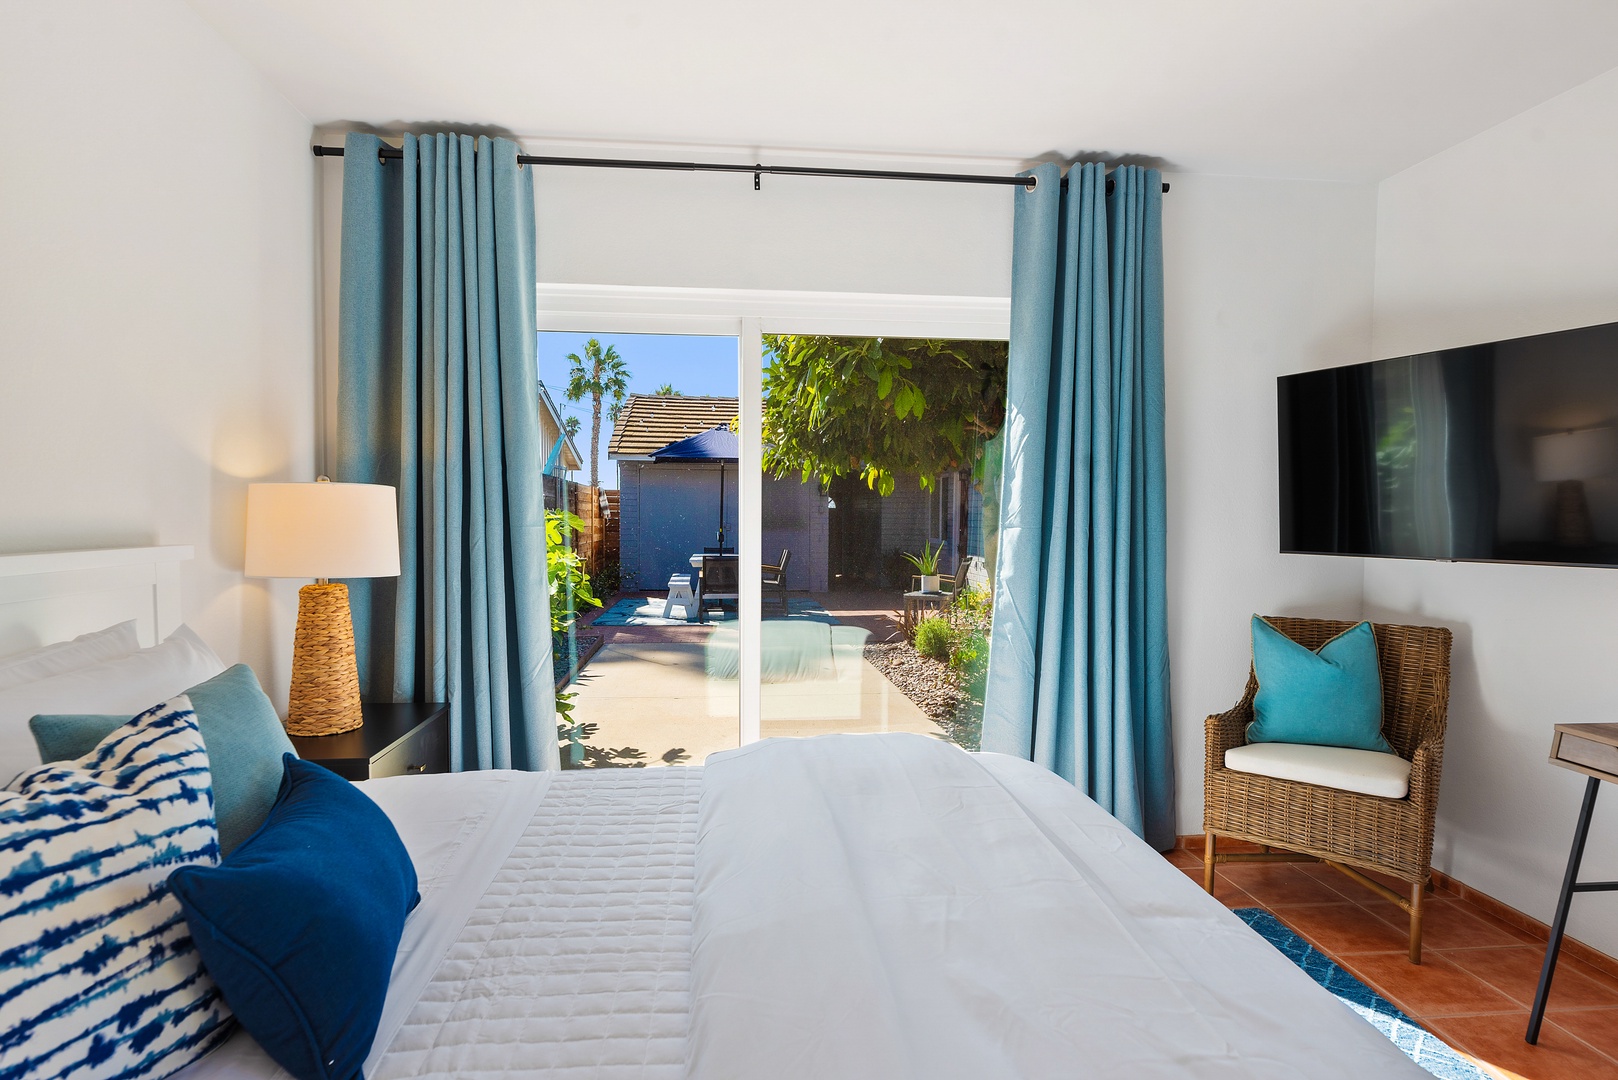 La Jolla Vacation Rentals, Hemingway's Beach House - Suite bedroom has a king bed